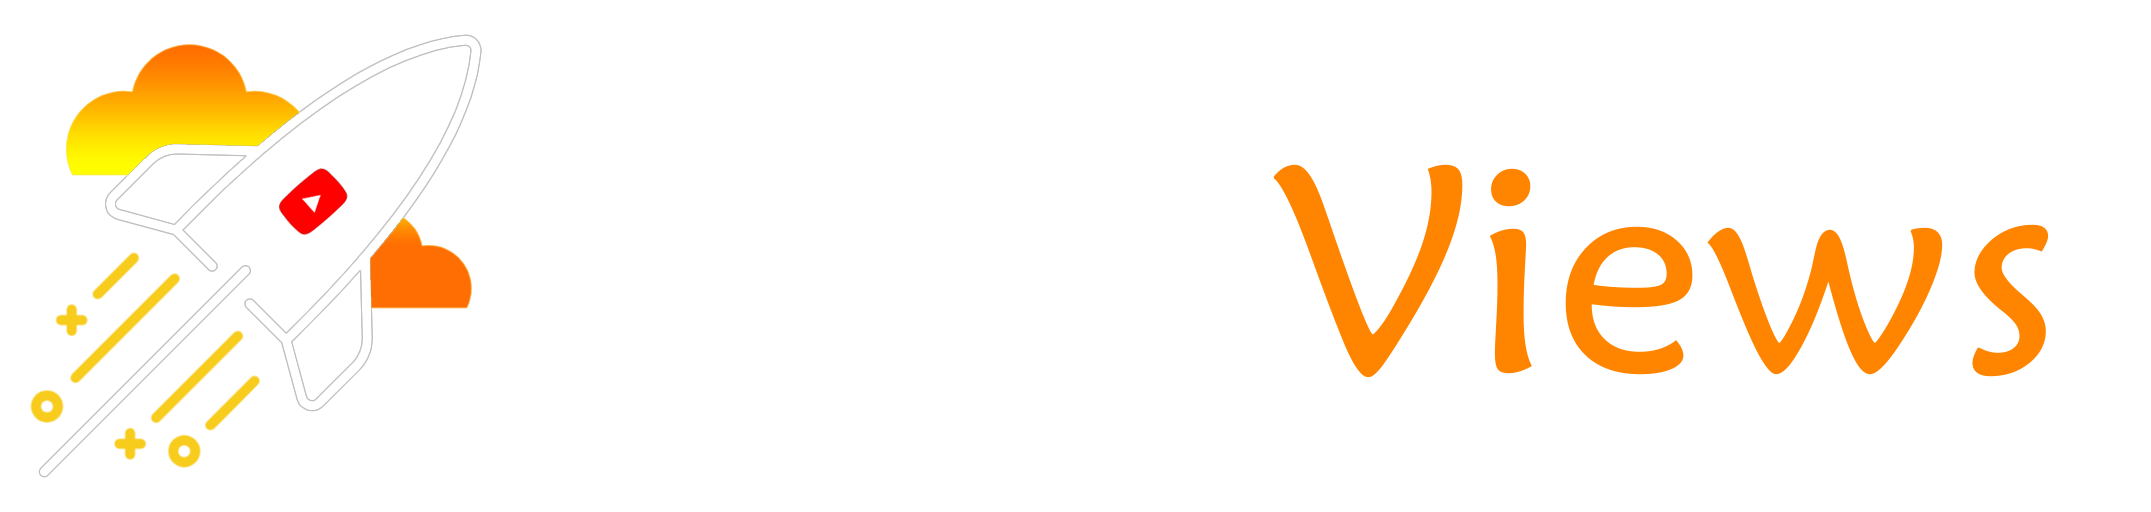 Visit4views